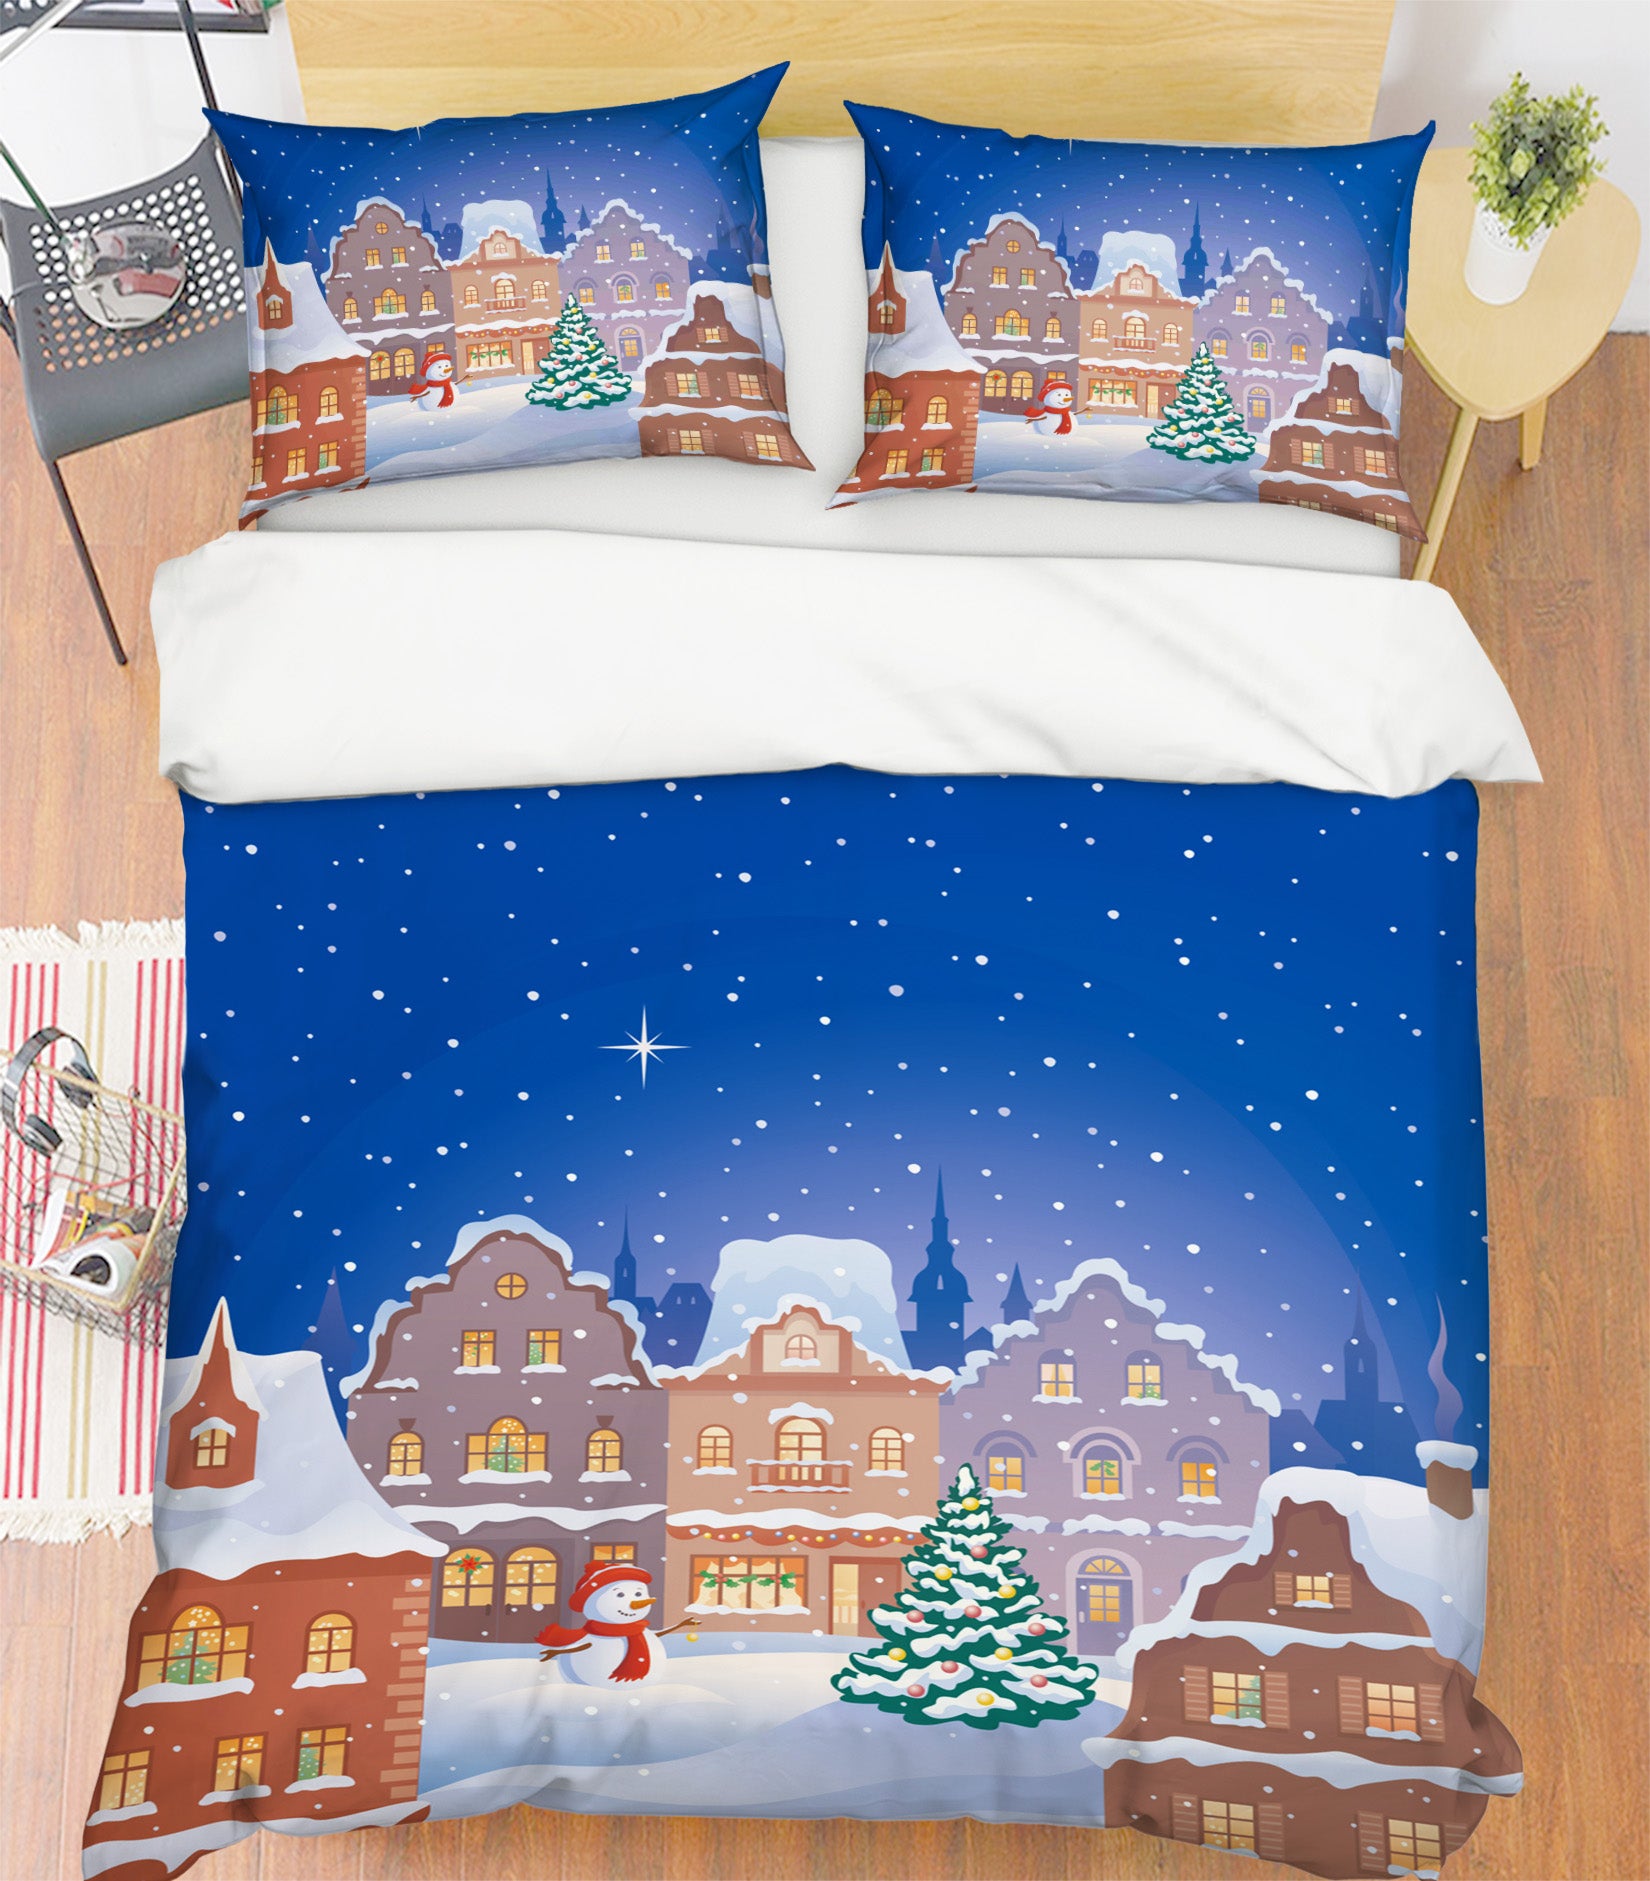 3D Houses Snow 31102 Christmas Quilt Duvet Cover Xmas Bed Pillowcases